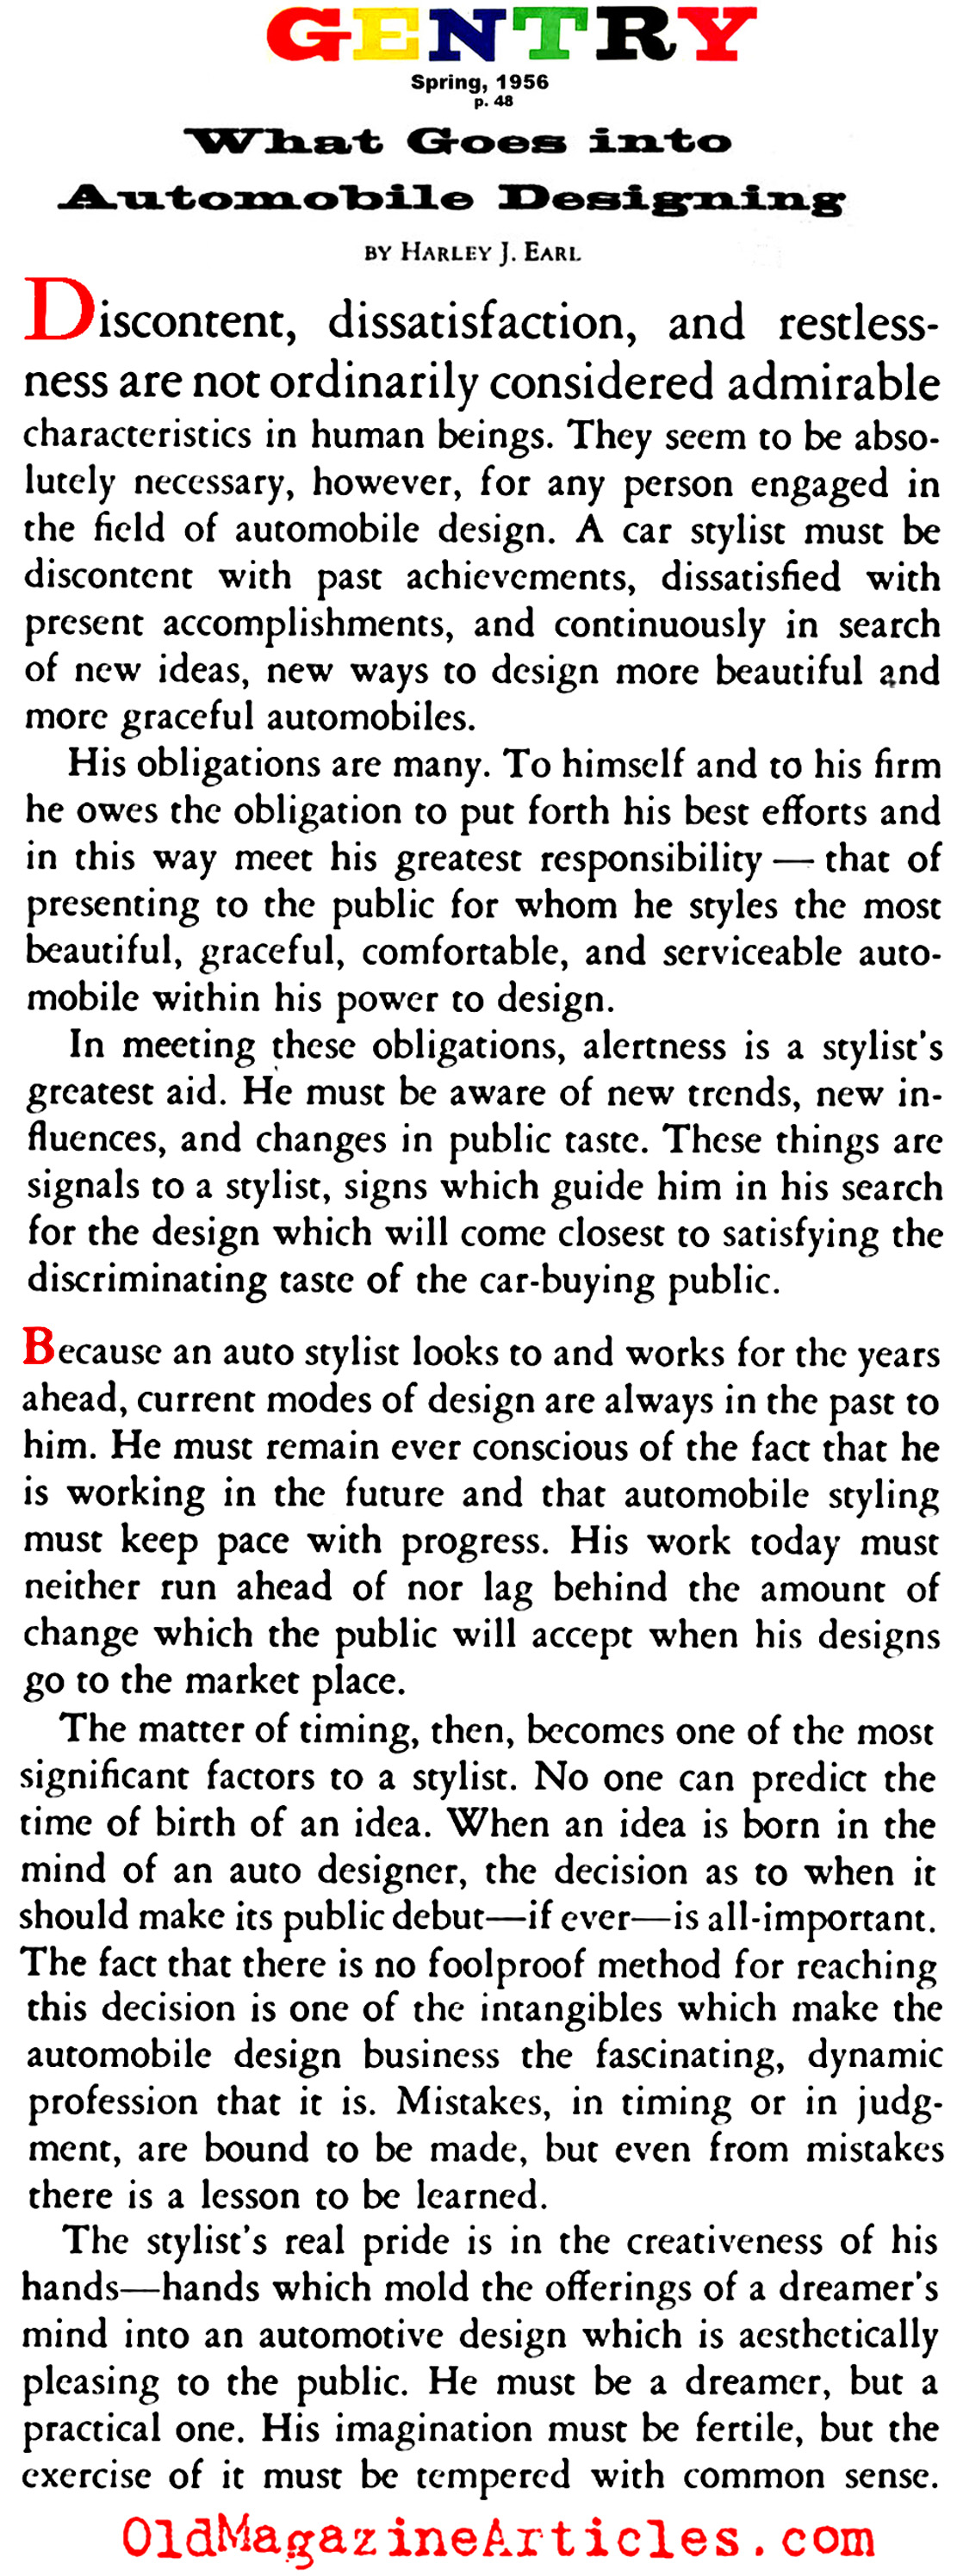 Harley Earl on Car Design (Gentry Magazine, 1956)